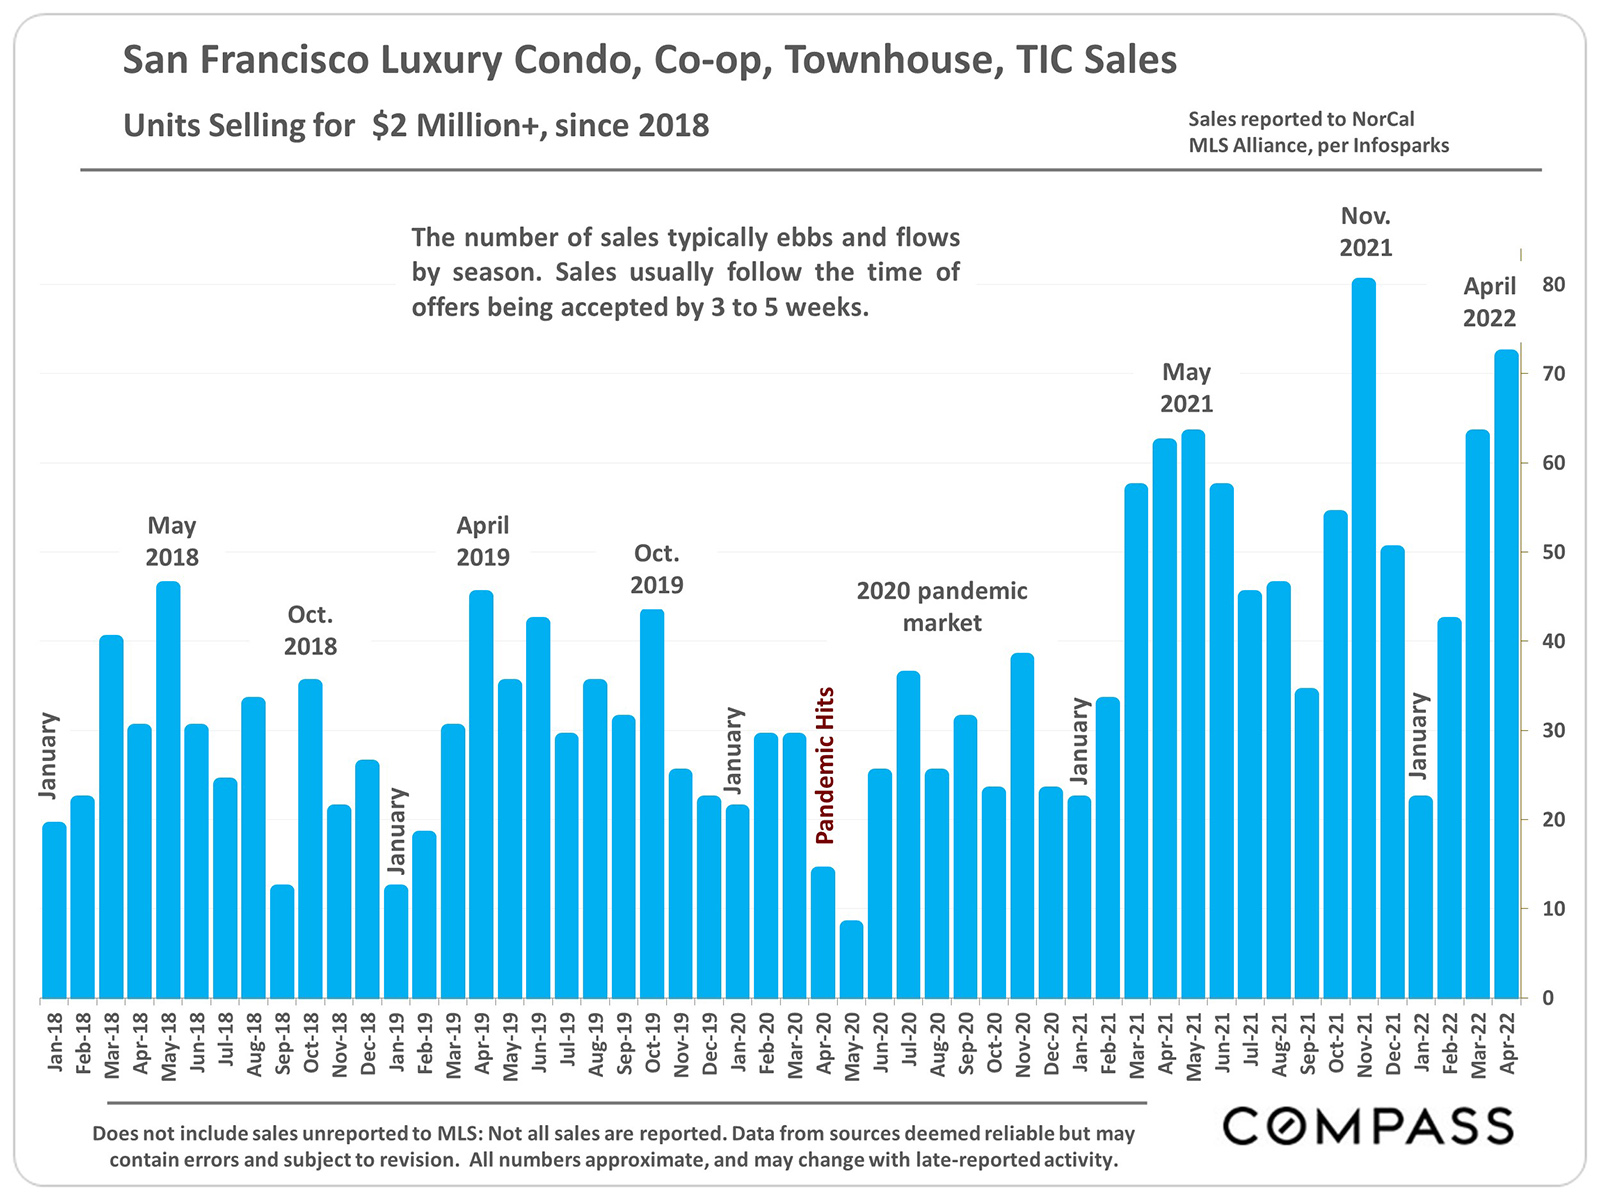 San Francisco Luxury Condo Coop Townhouses TIC Sales